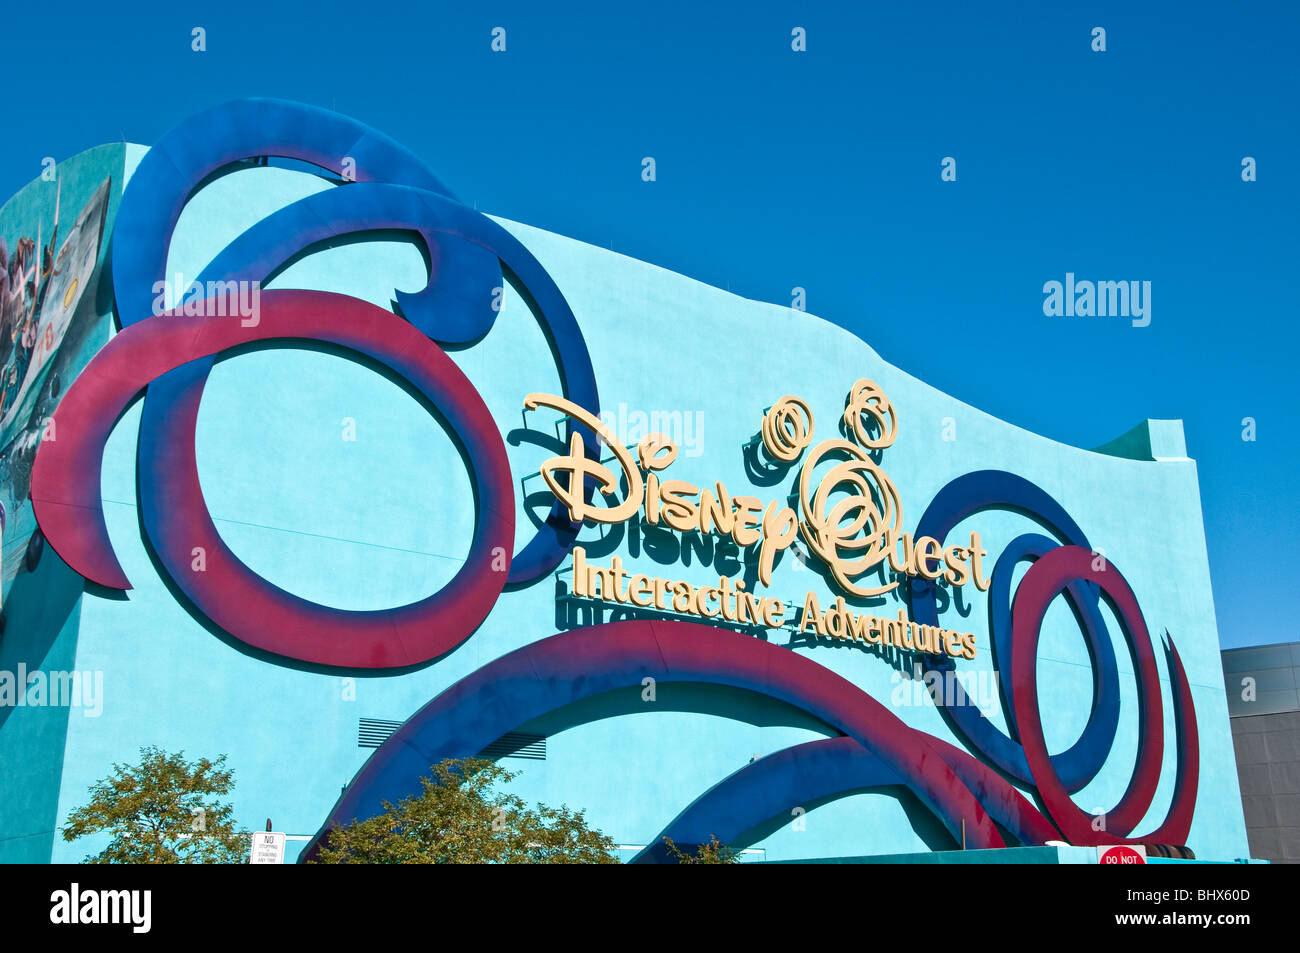 Disney Quest interaktive Abenteuer Downtown Disney West Orlando Florida FL Stockfoto